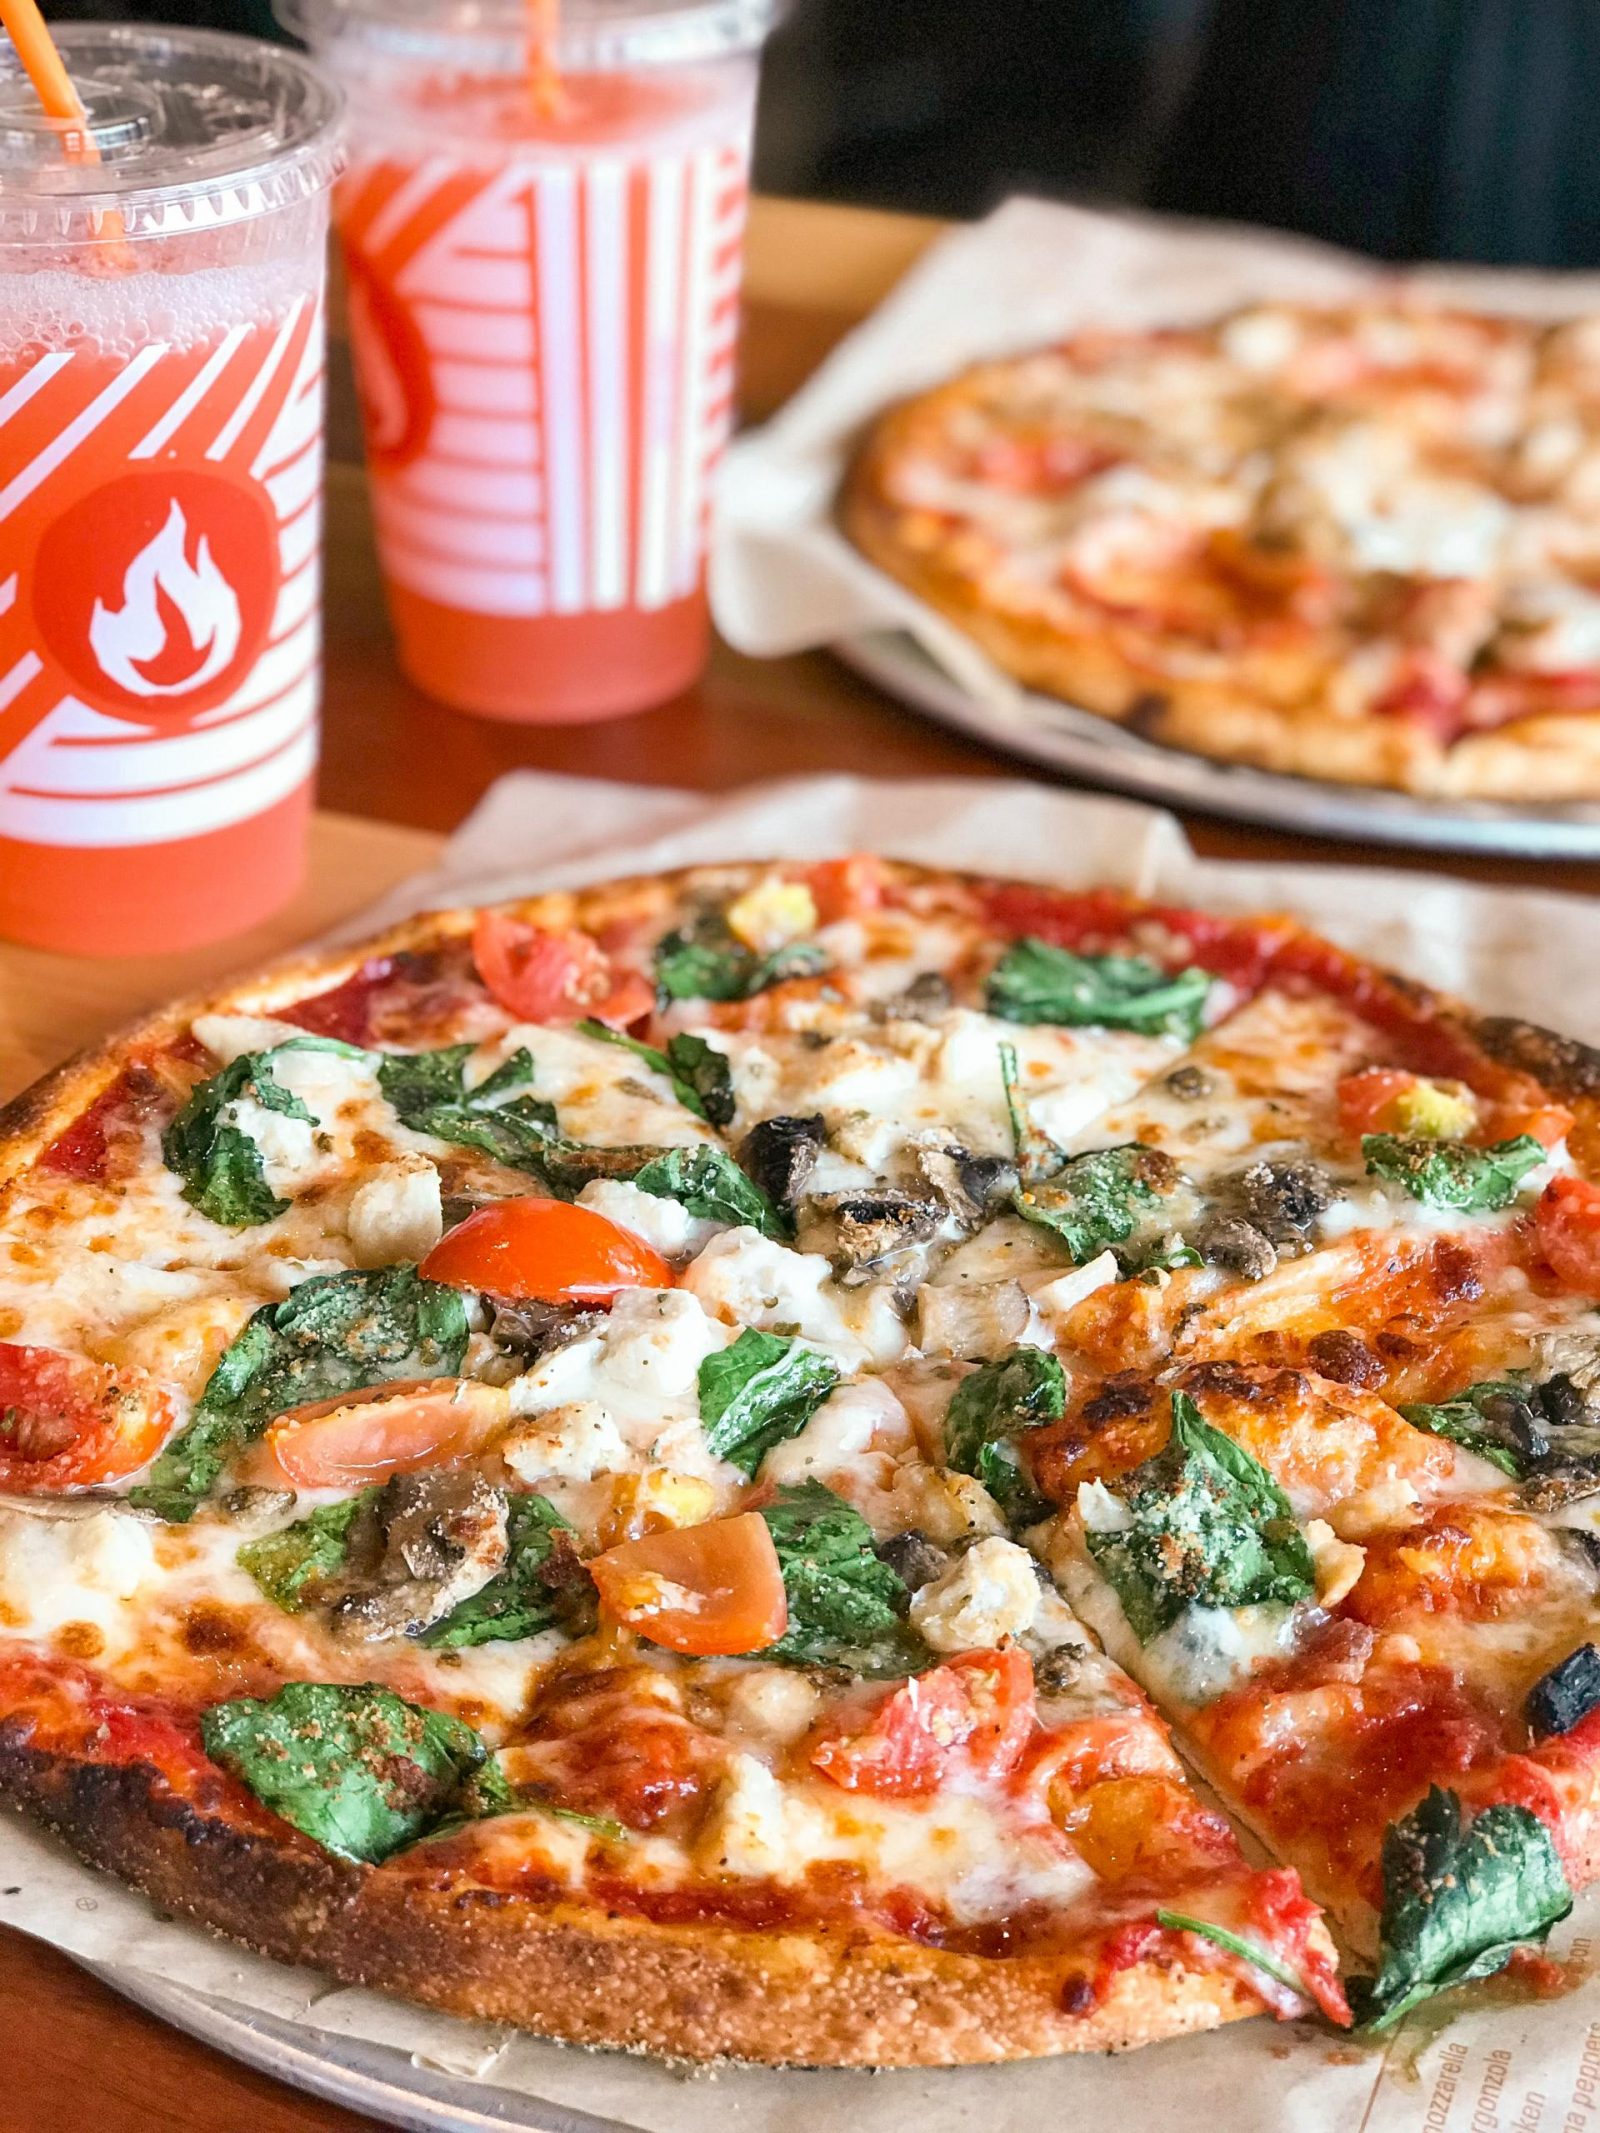 Blaze Pizza at Disney Springs - Quick Service Restaurants at Disney World 